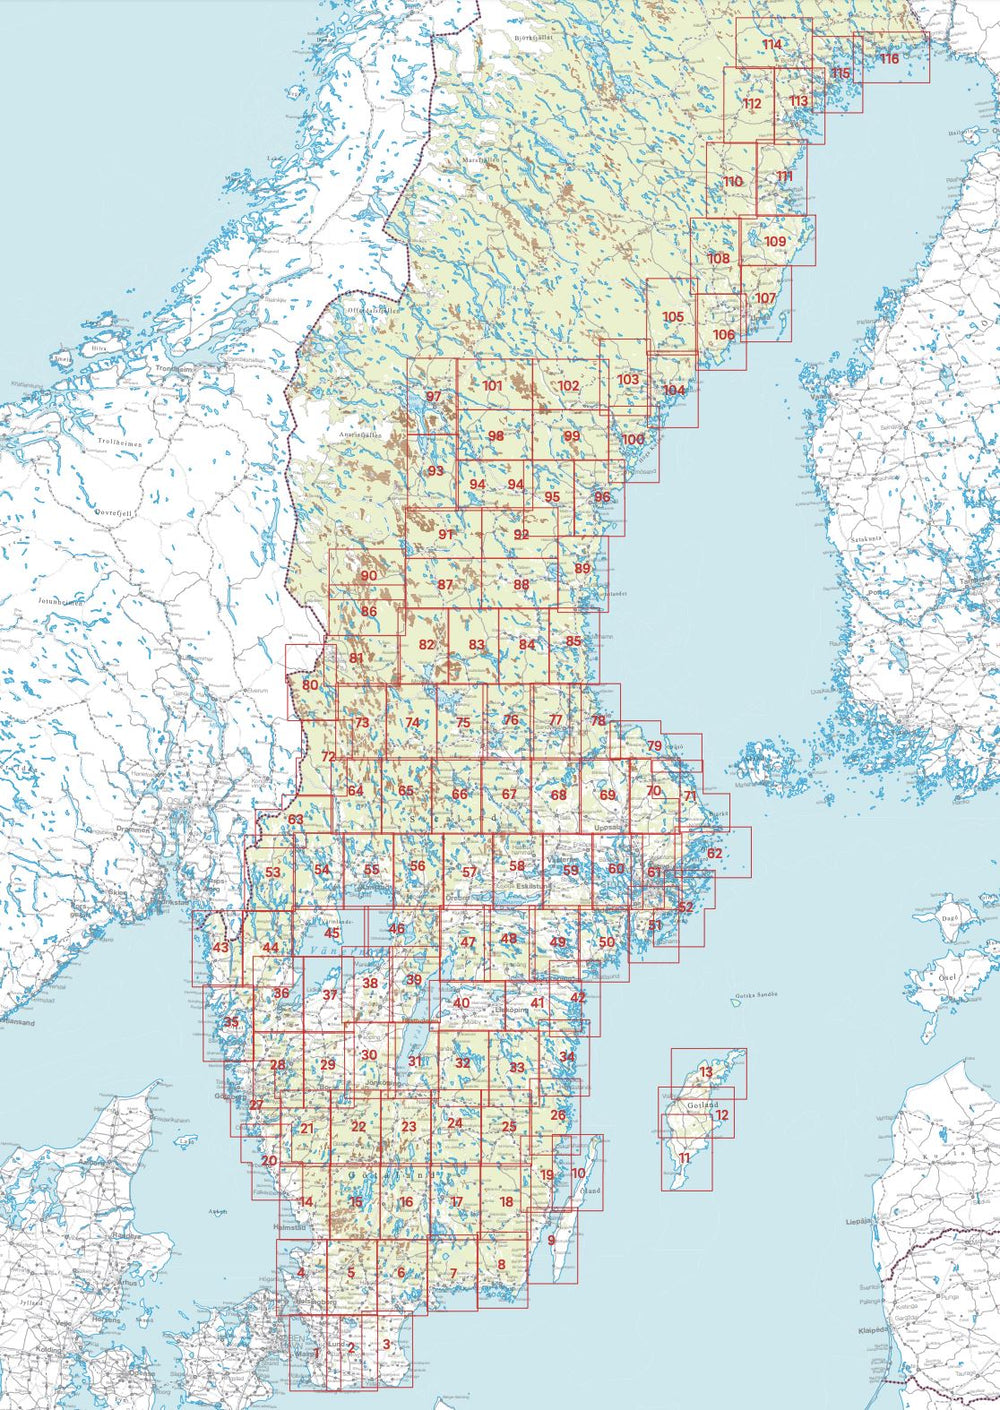 Carte topographique n° 75 - Leksand (Suède) | Norstedts - Sverigeserien carte pliée Norstedts 